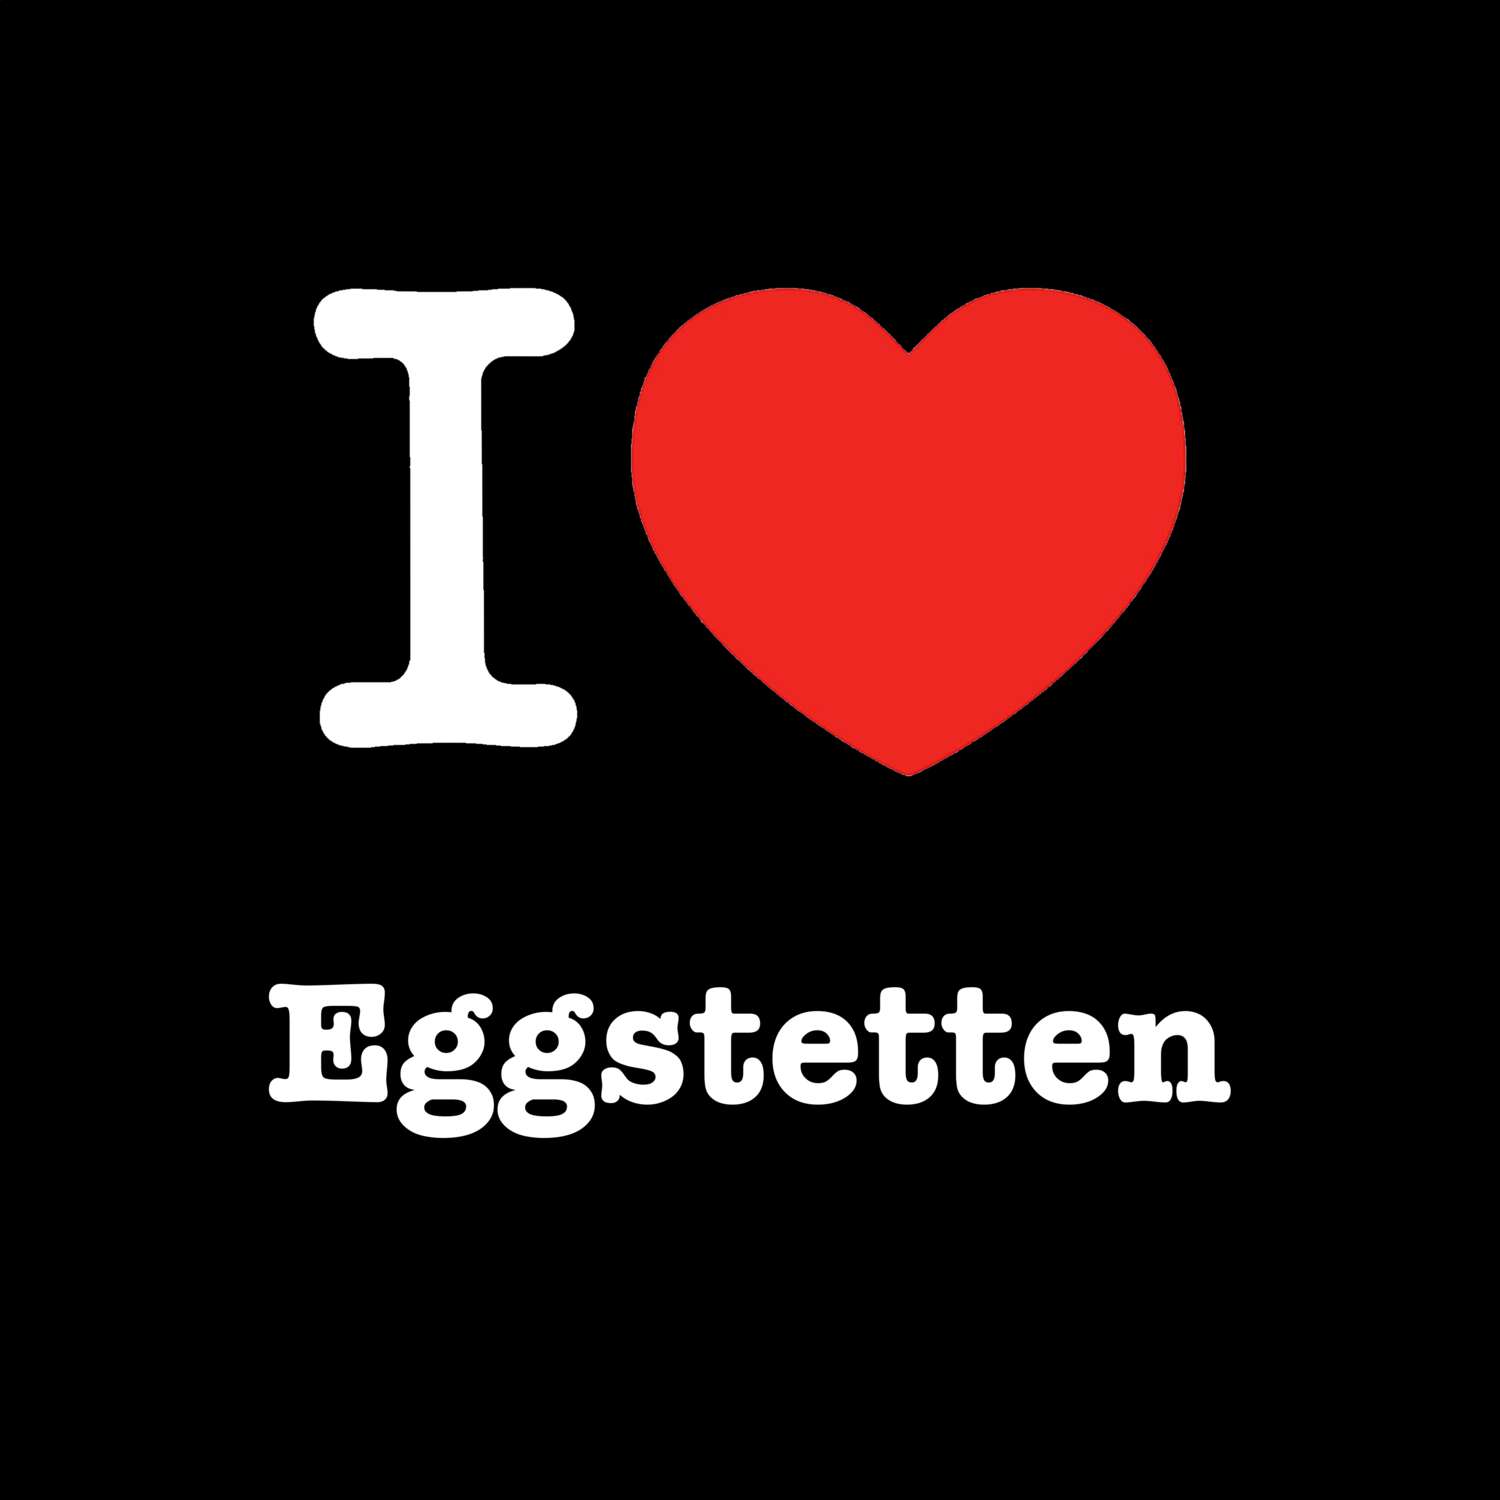 Eggstetten T-Shirt »I love«